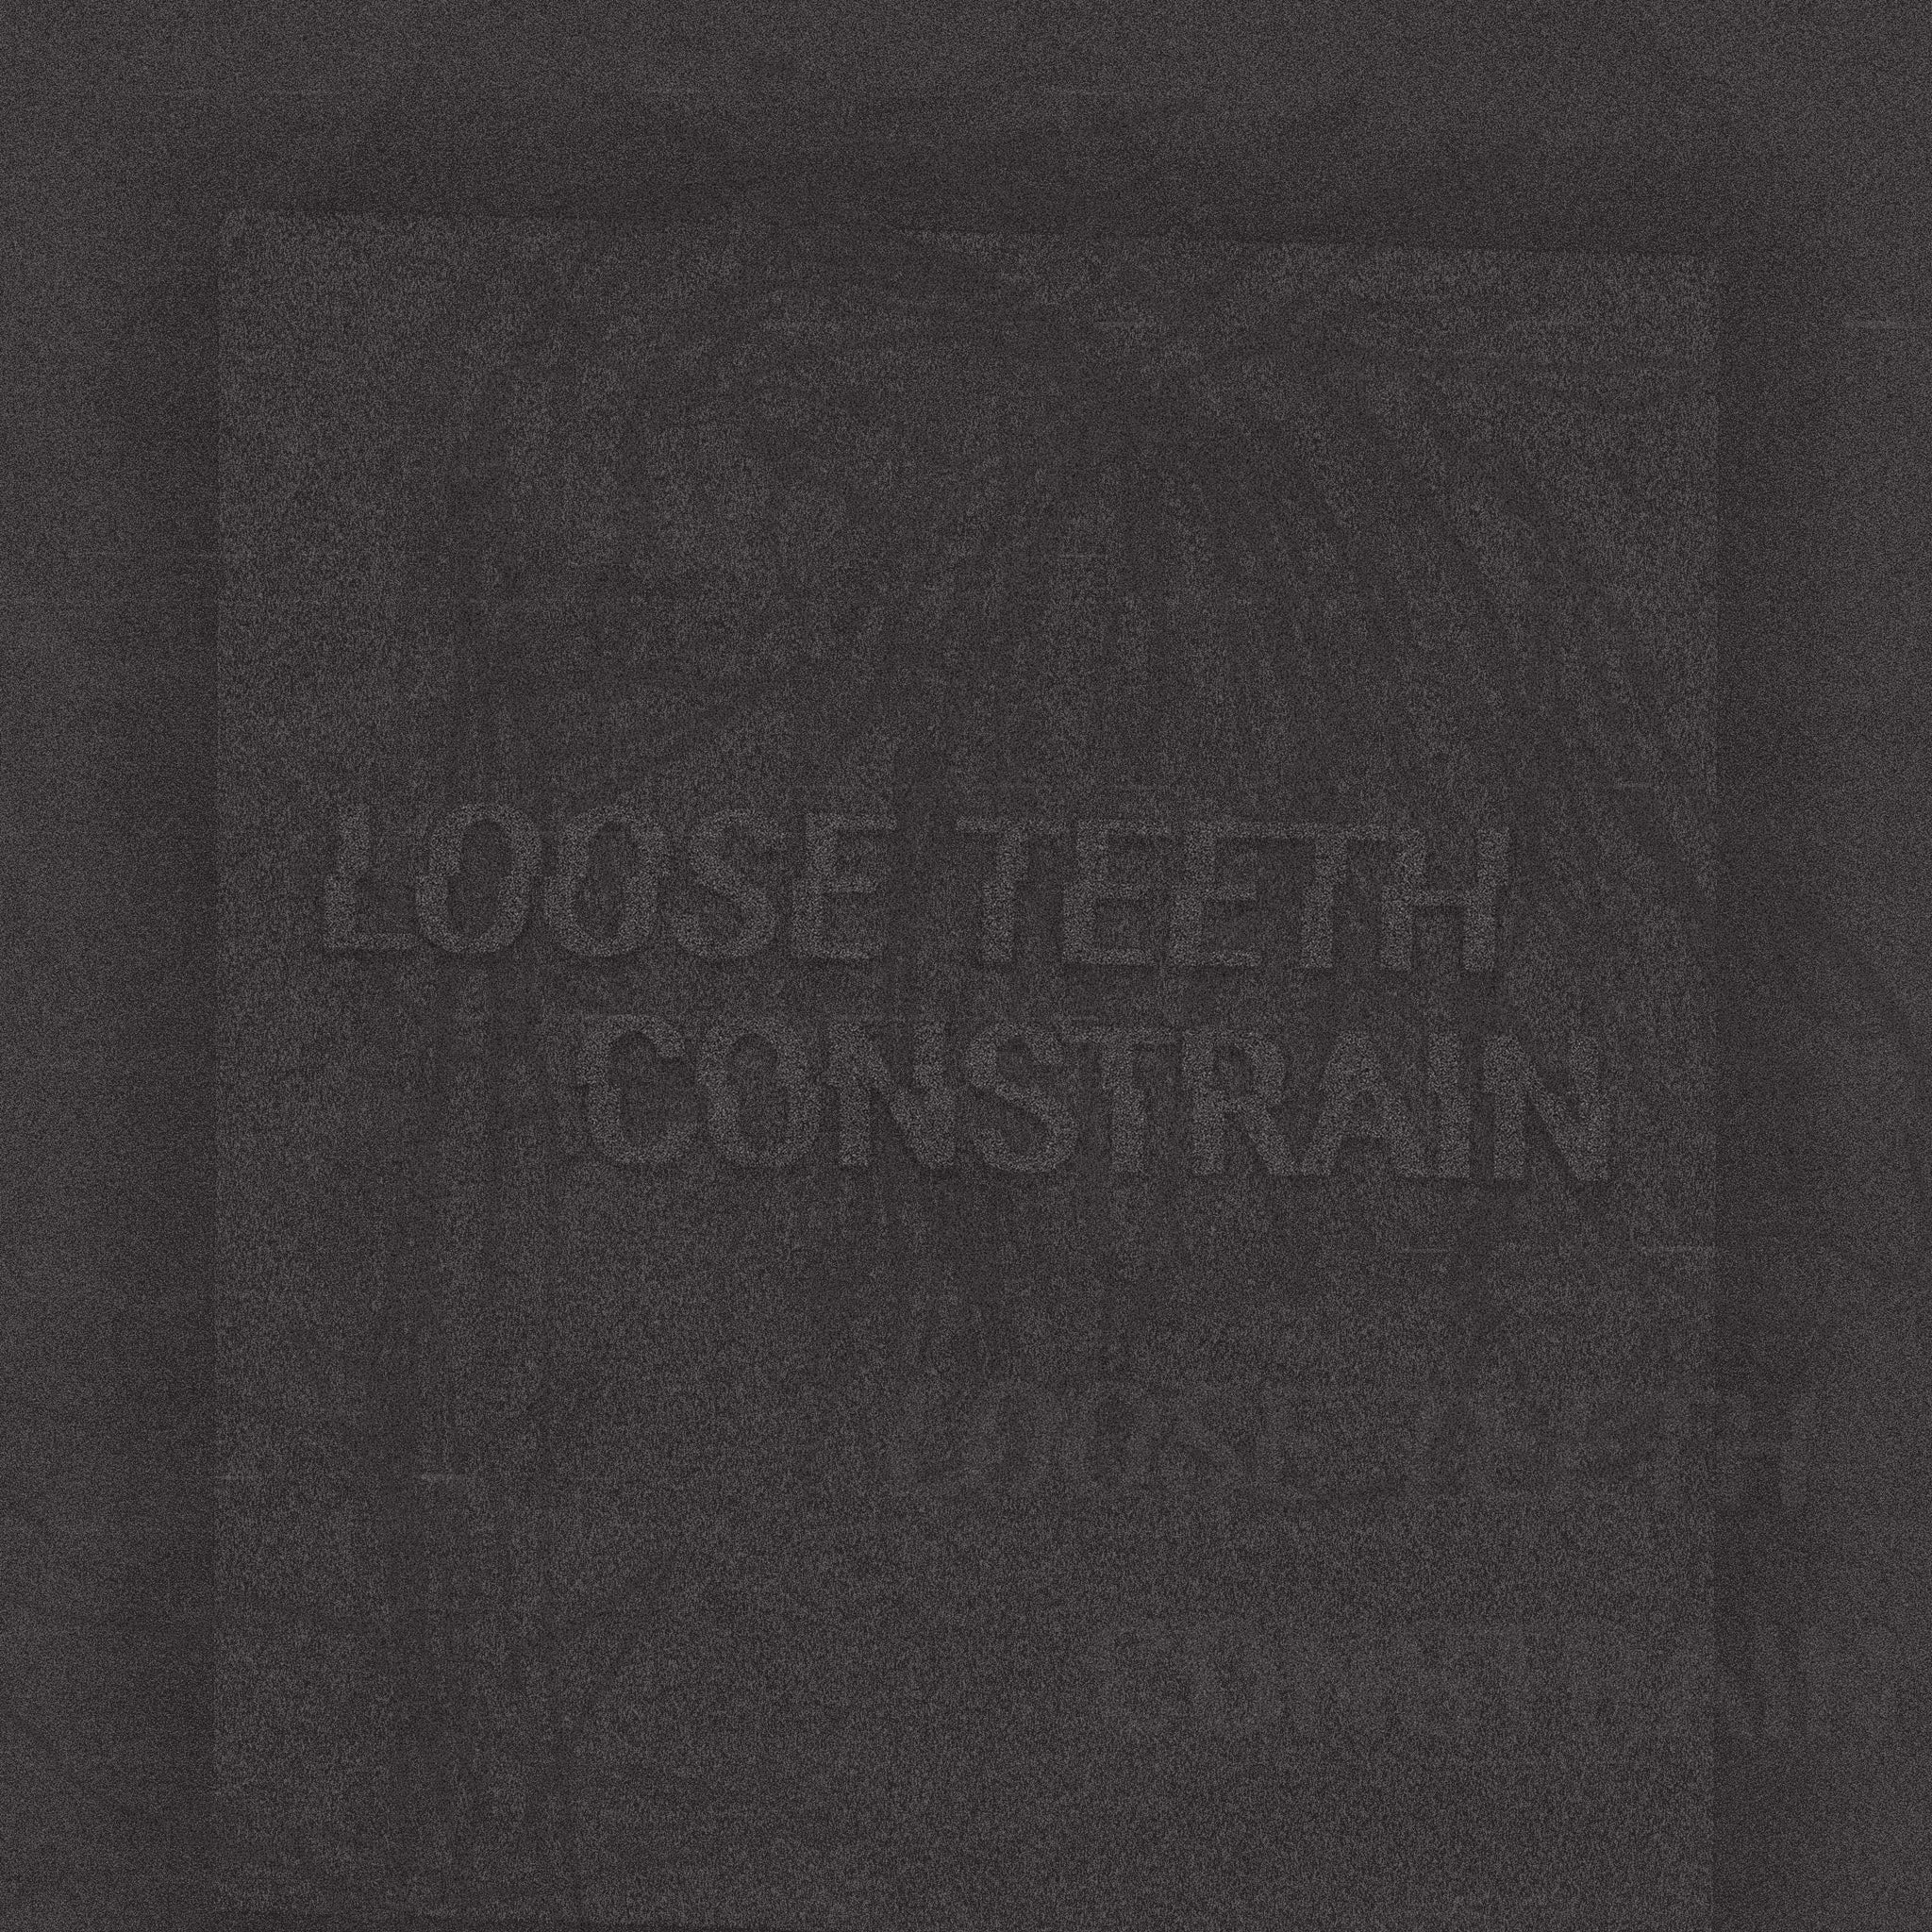 CONSTRAIN + LOOSE TEETH - Split (cassette)